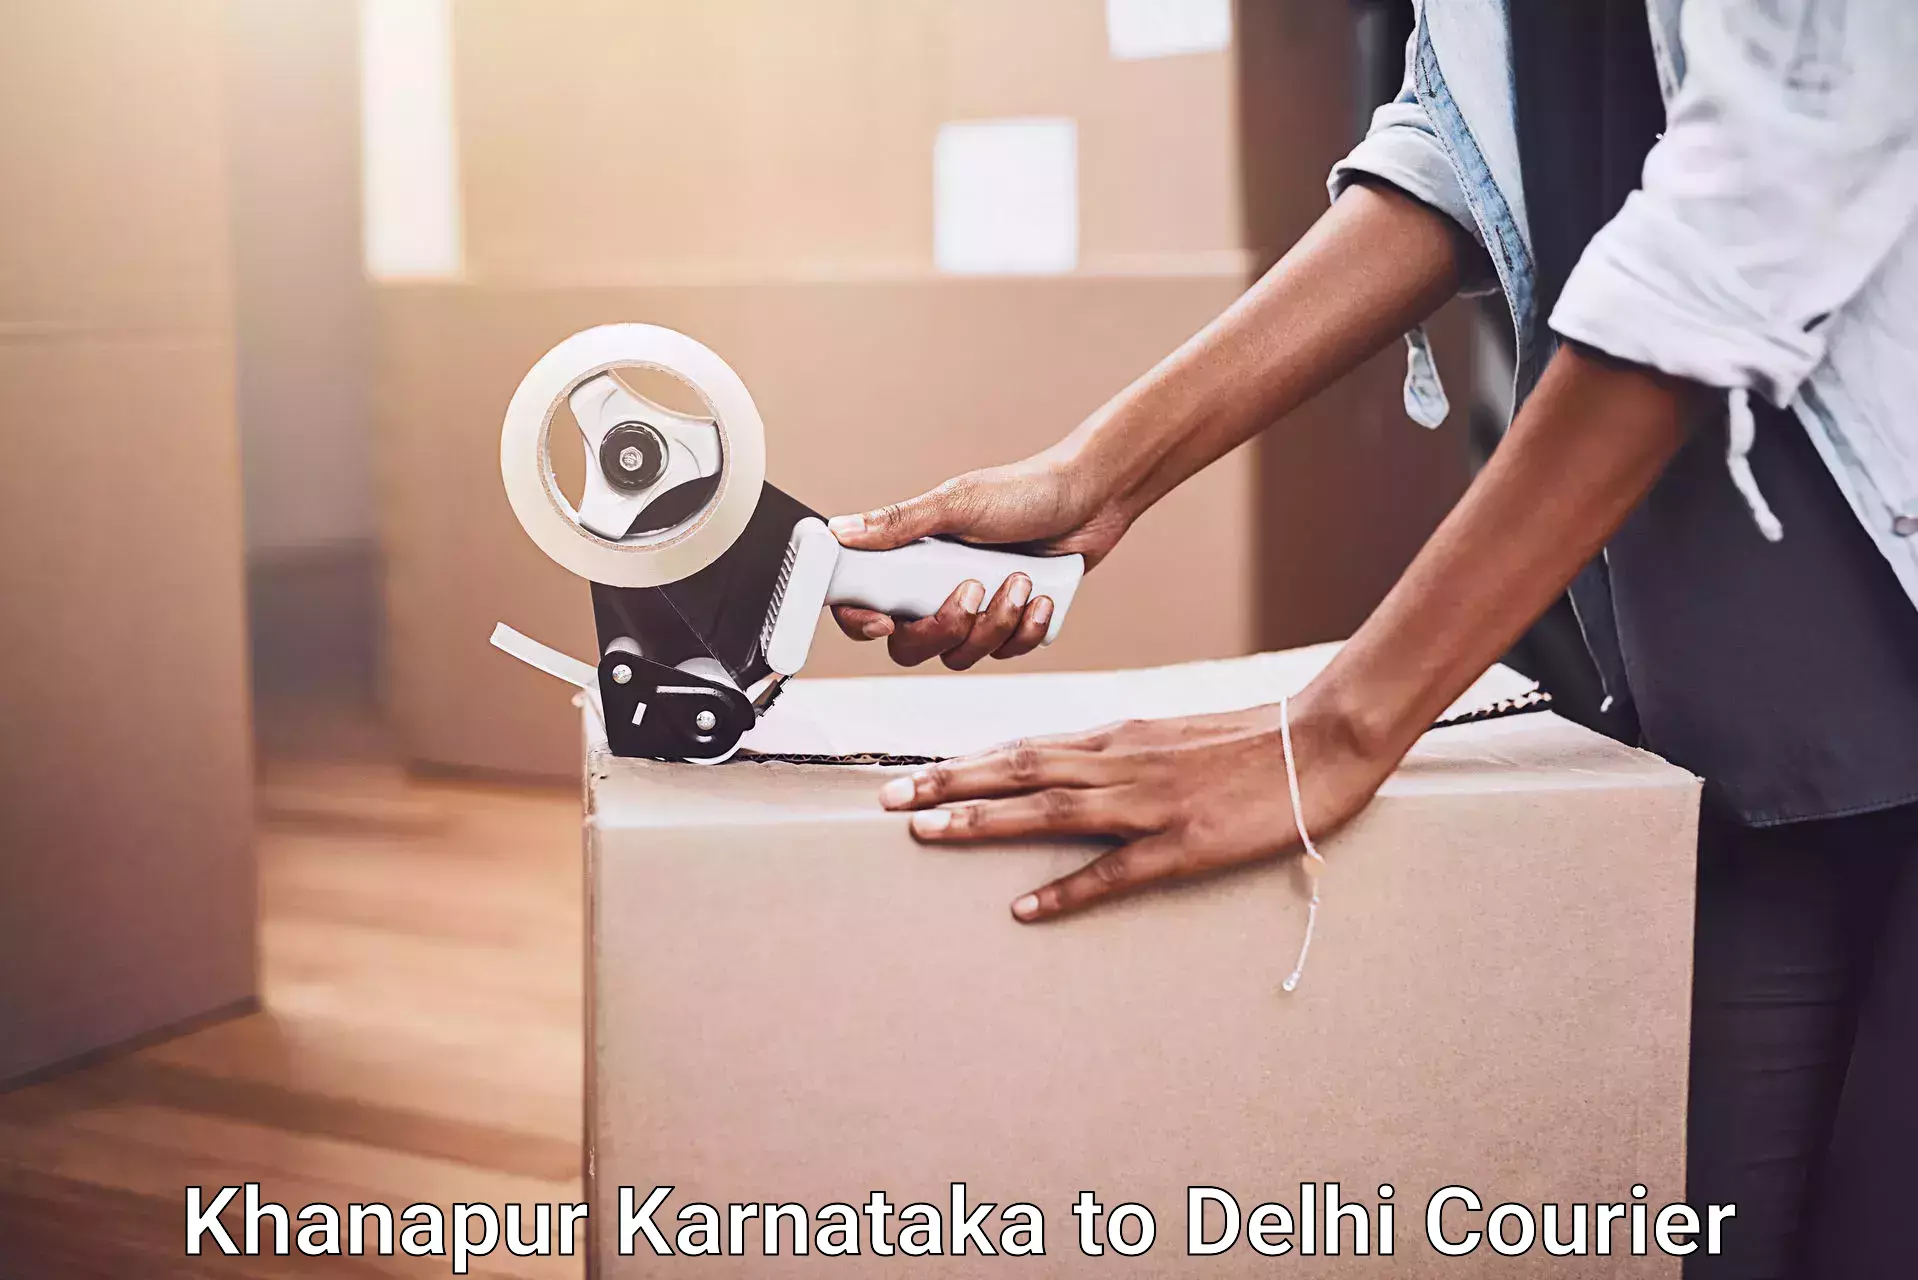 Trusted moving company Khanapur Karnataka to University of Delhi